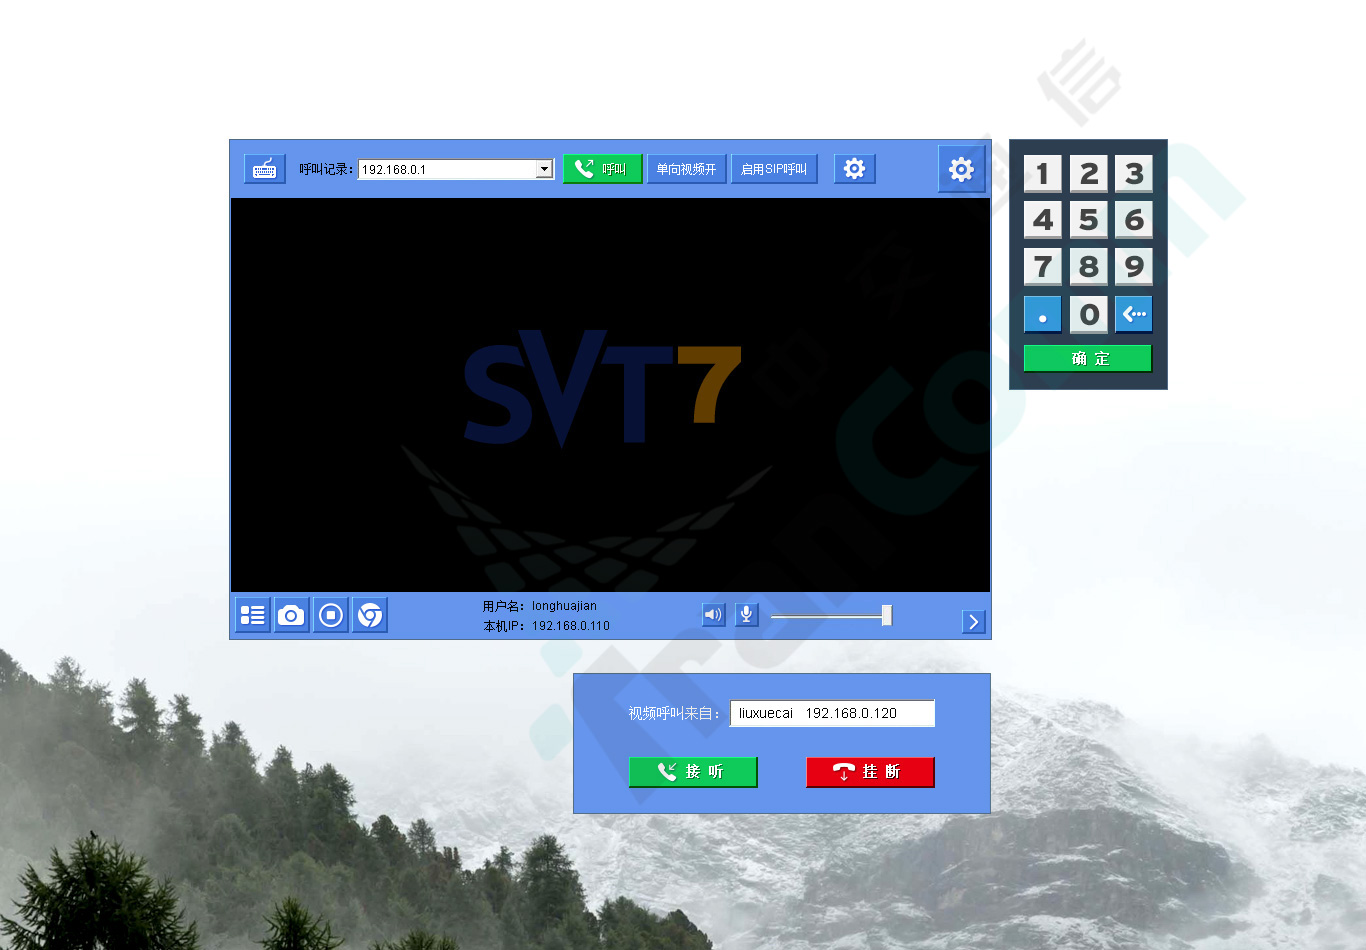 SVT7海事卫星音视频传输通信系统